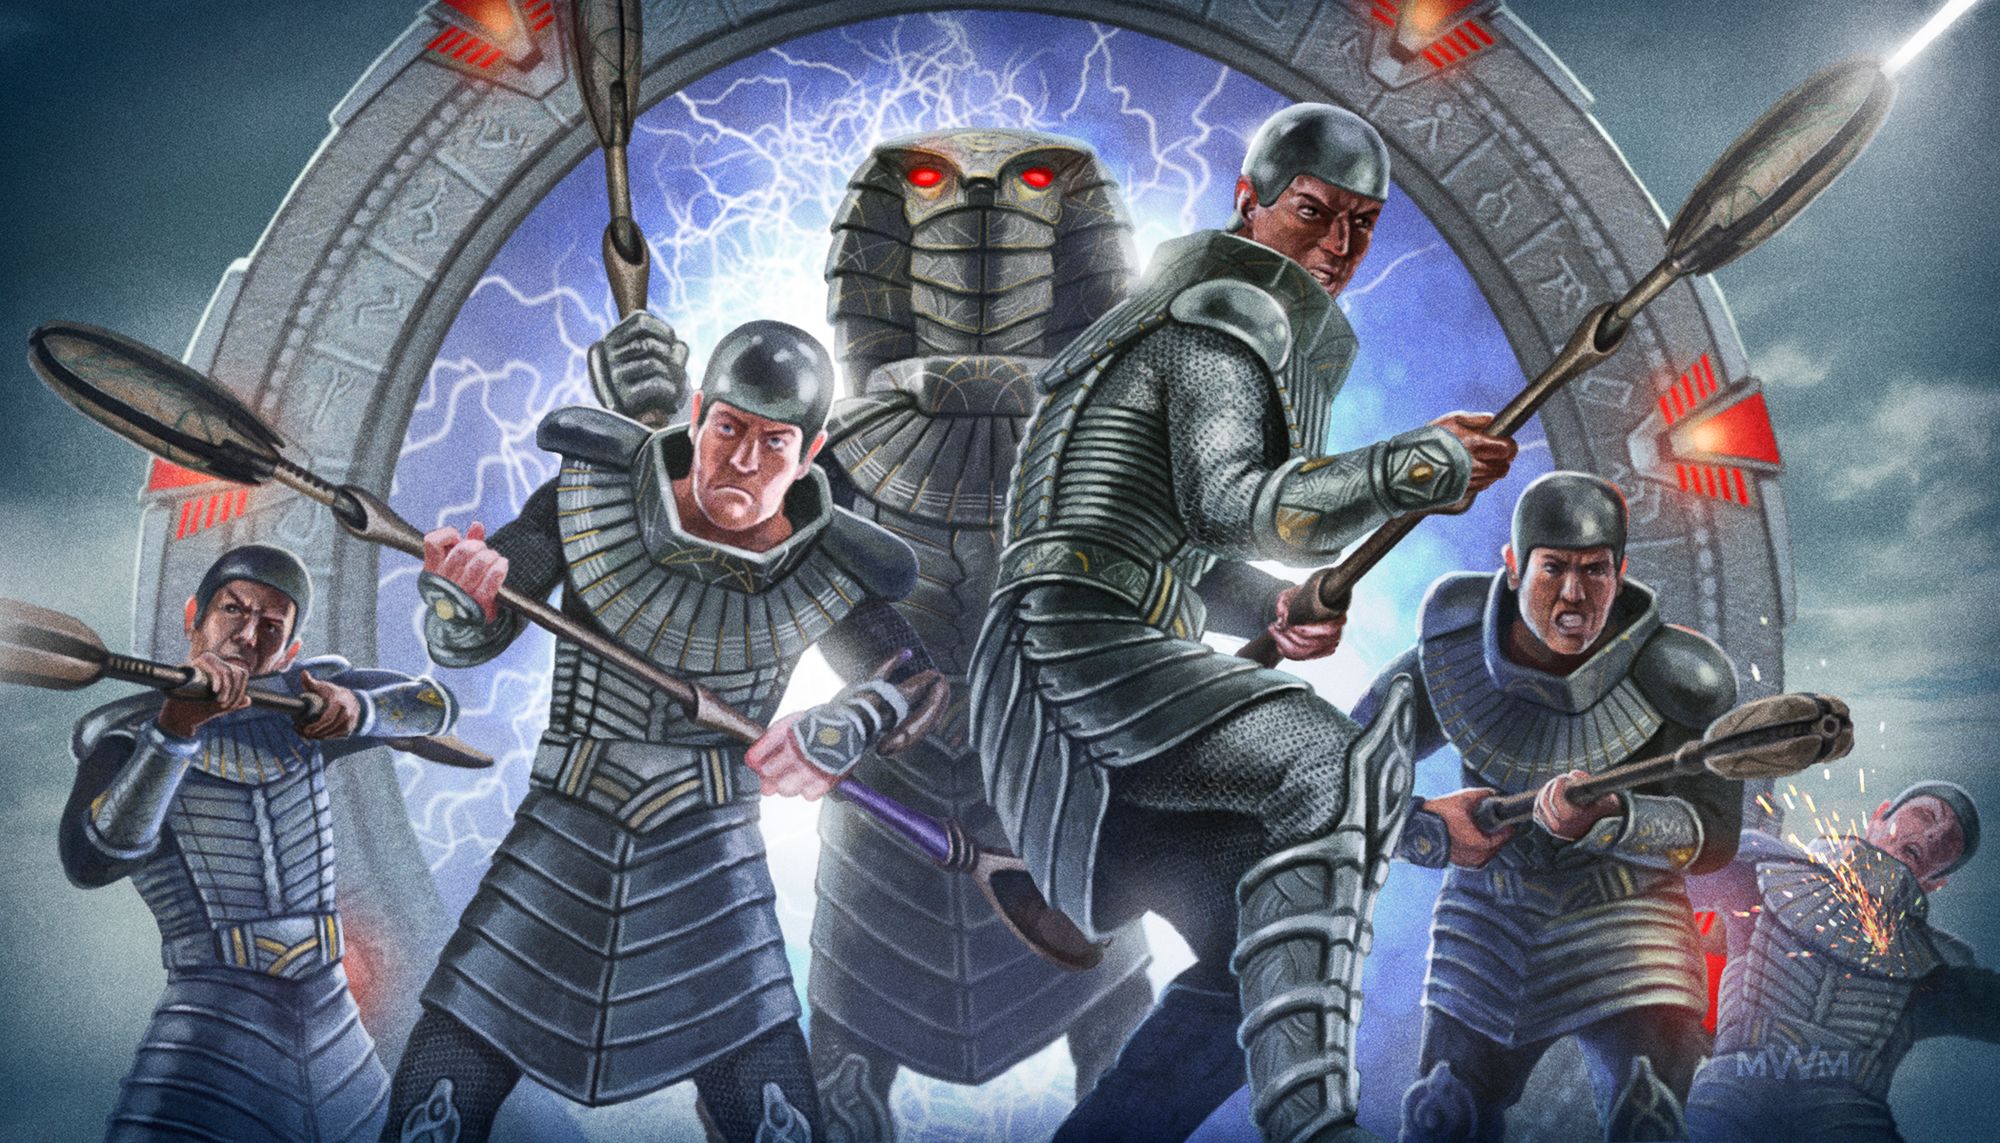 Stargate | How Wyvern’s SG-1 RPG Dragged D&D Through the Gate